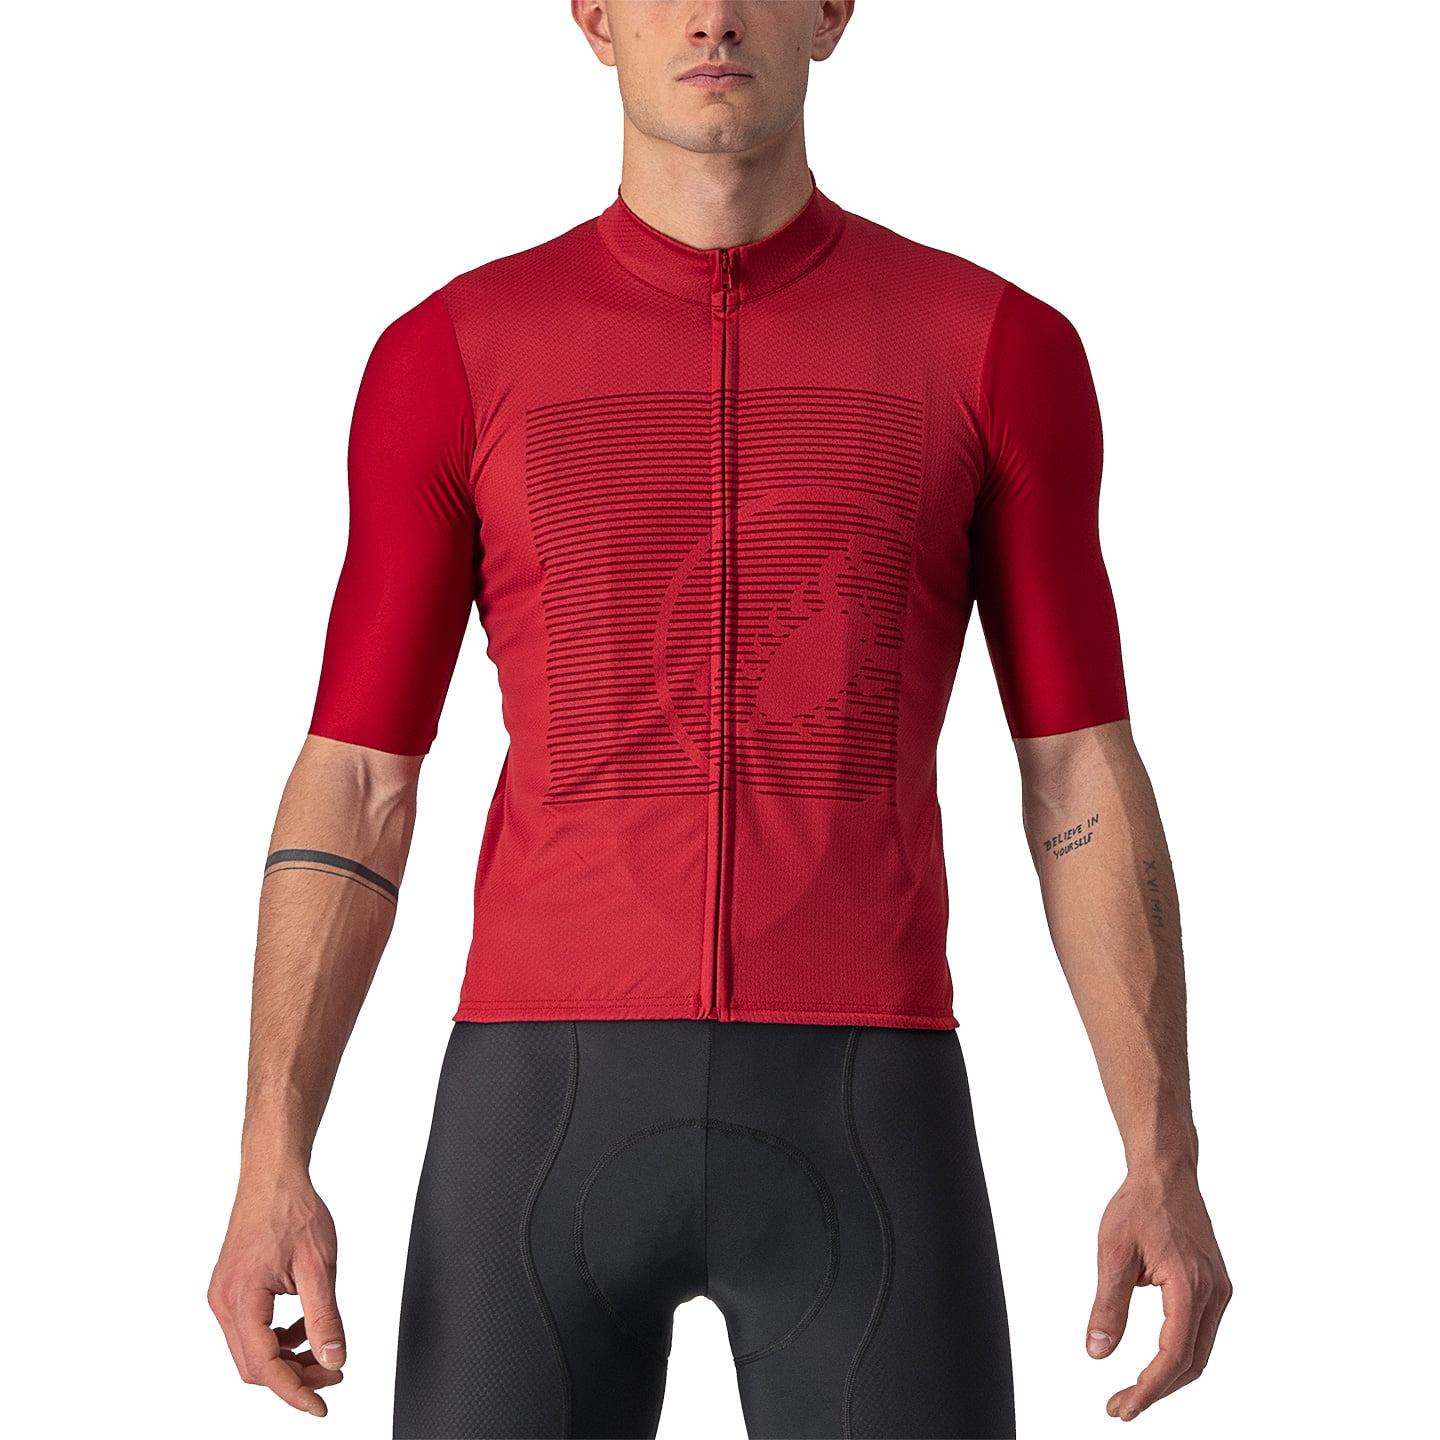 CASTELLI Bagarre Short Sleeve Jersey Short Sleeve Jersey, for men, size S, Cycling jersey, Cycling clothing